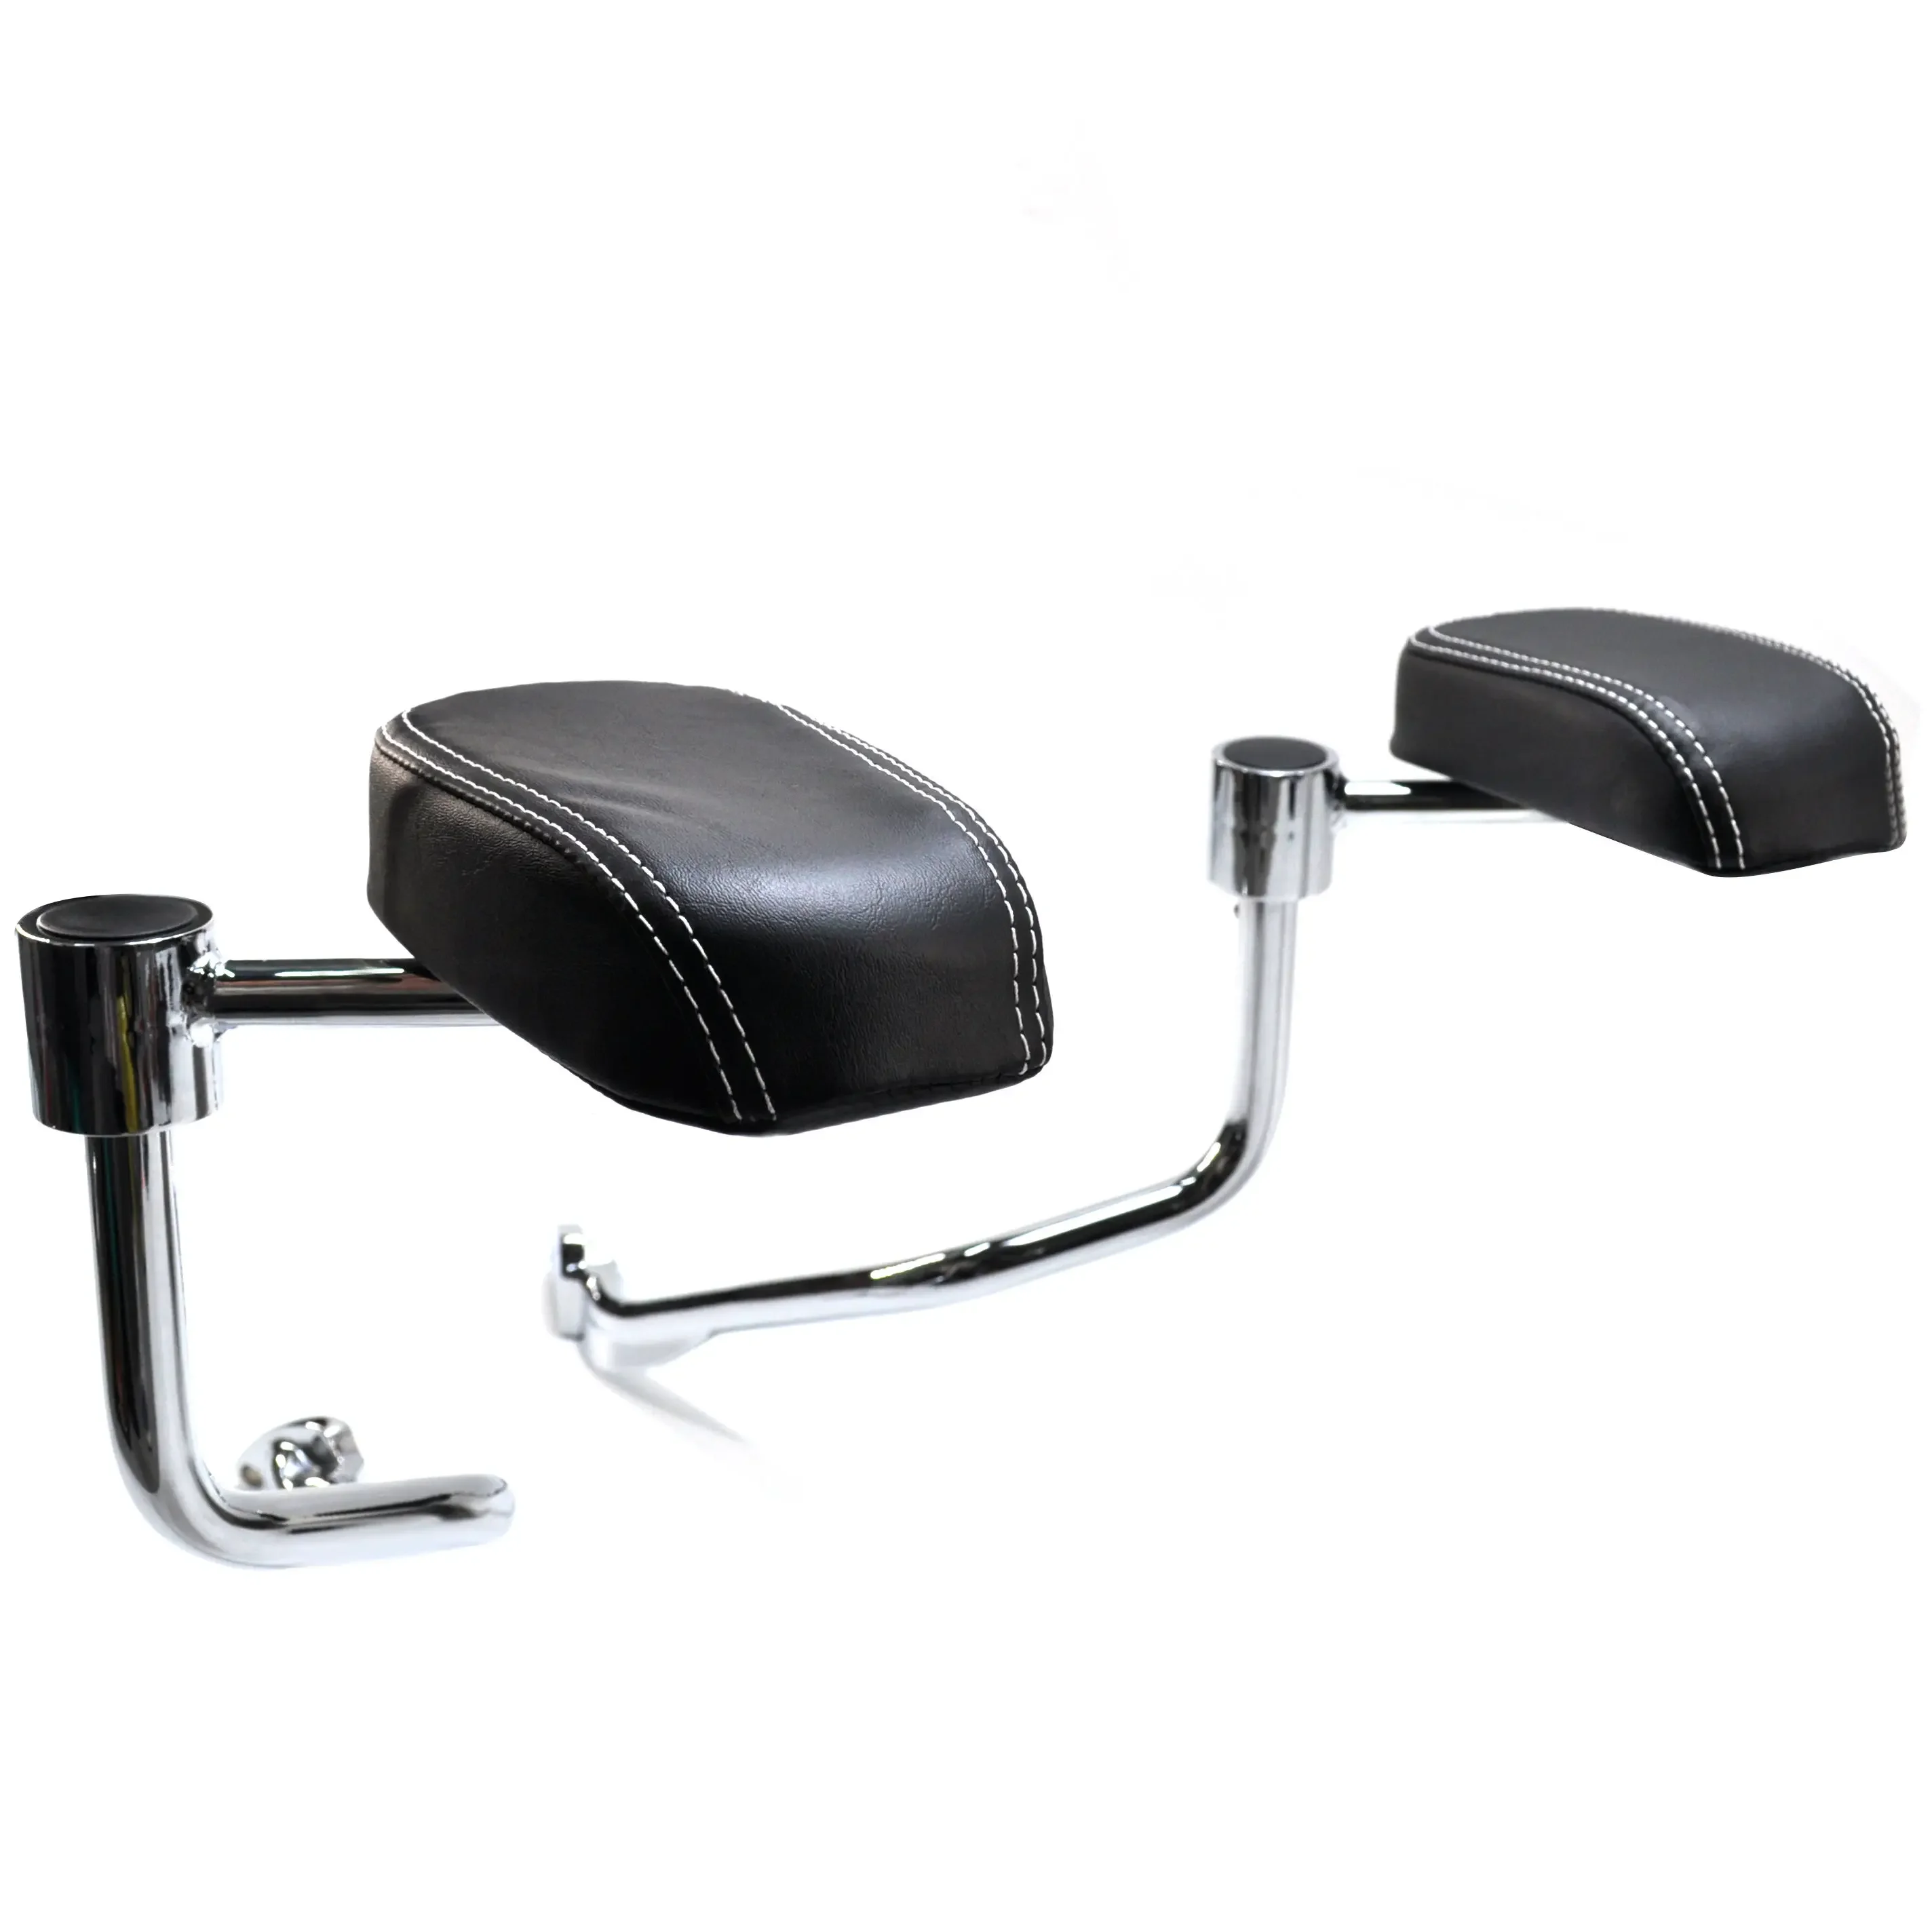 

Motorcycle Chrome Passenger Armrest Support Kit Adjustable Handrail Pads For Indian Roadmaster 2014-2021 Leather